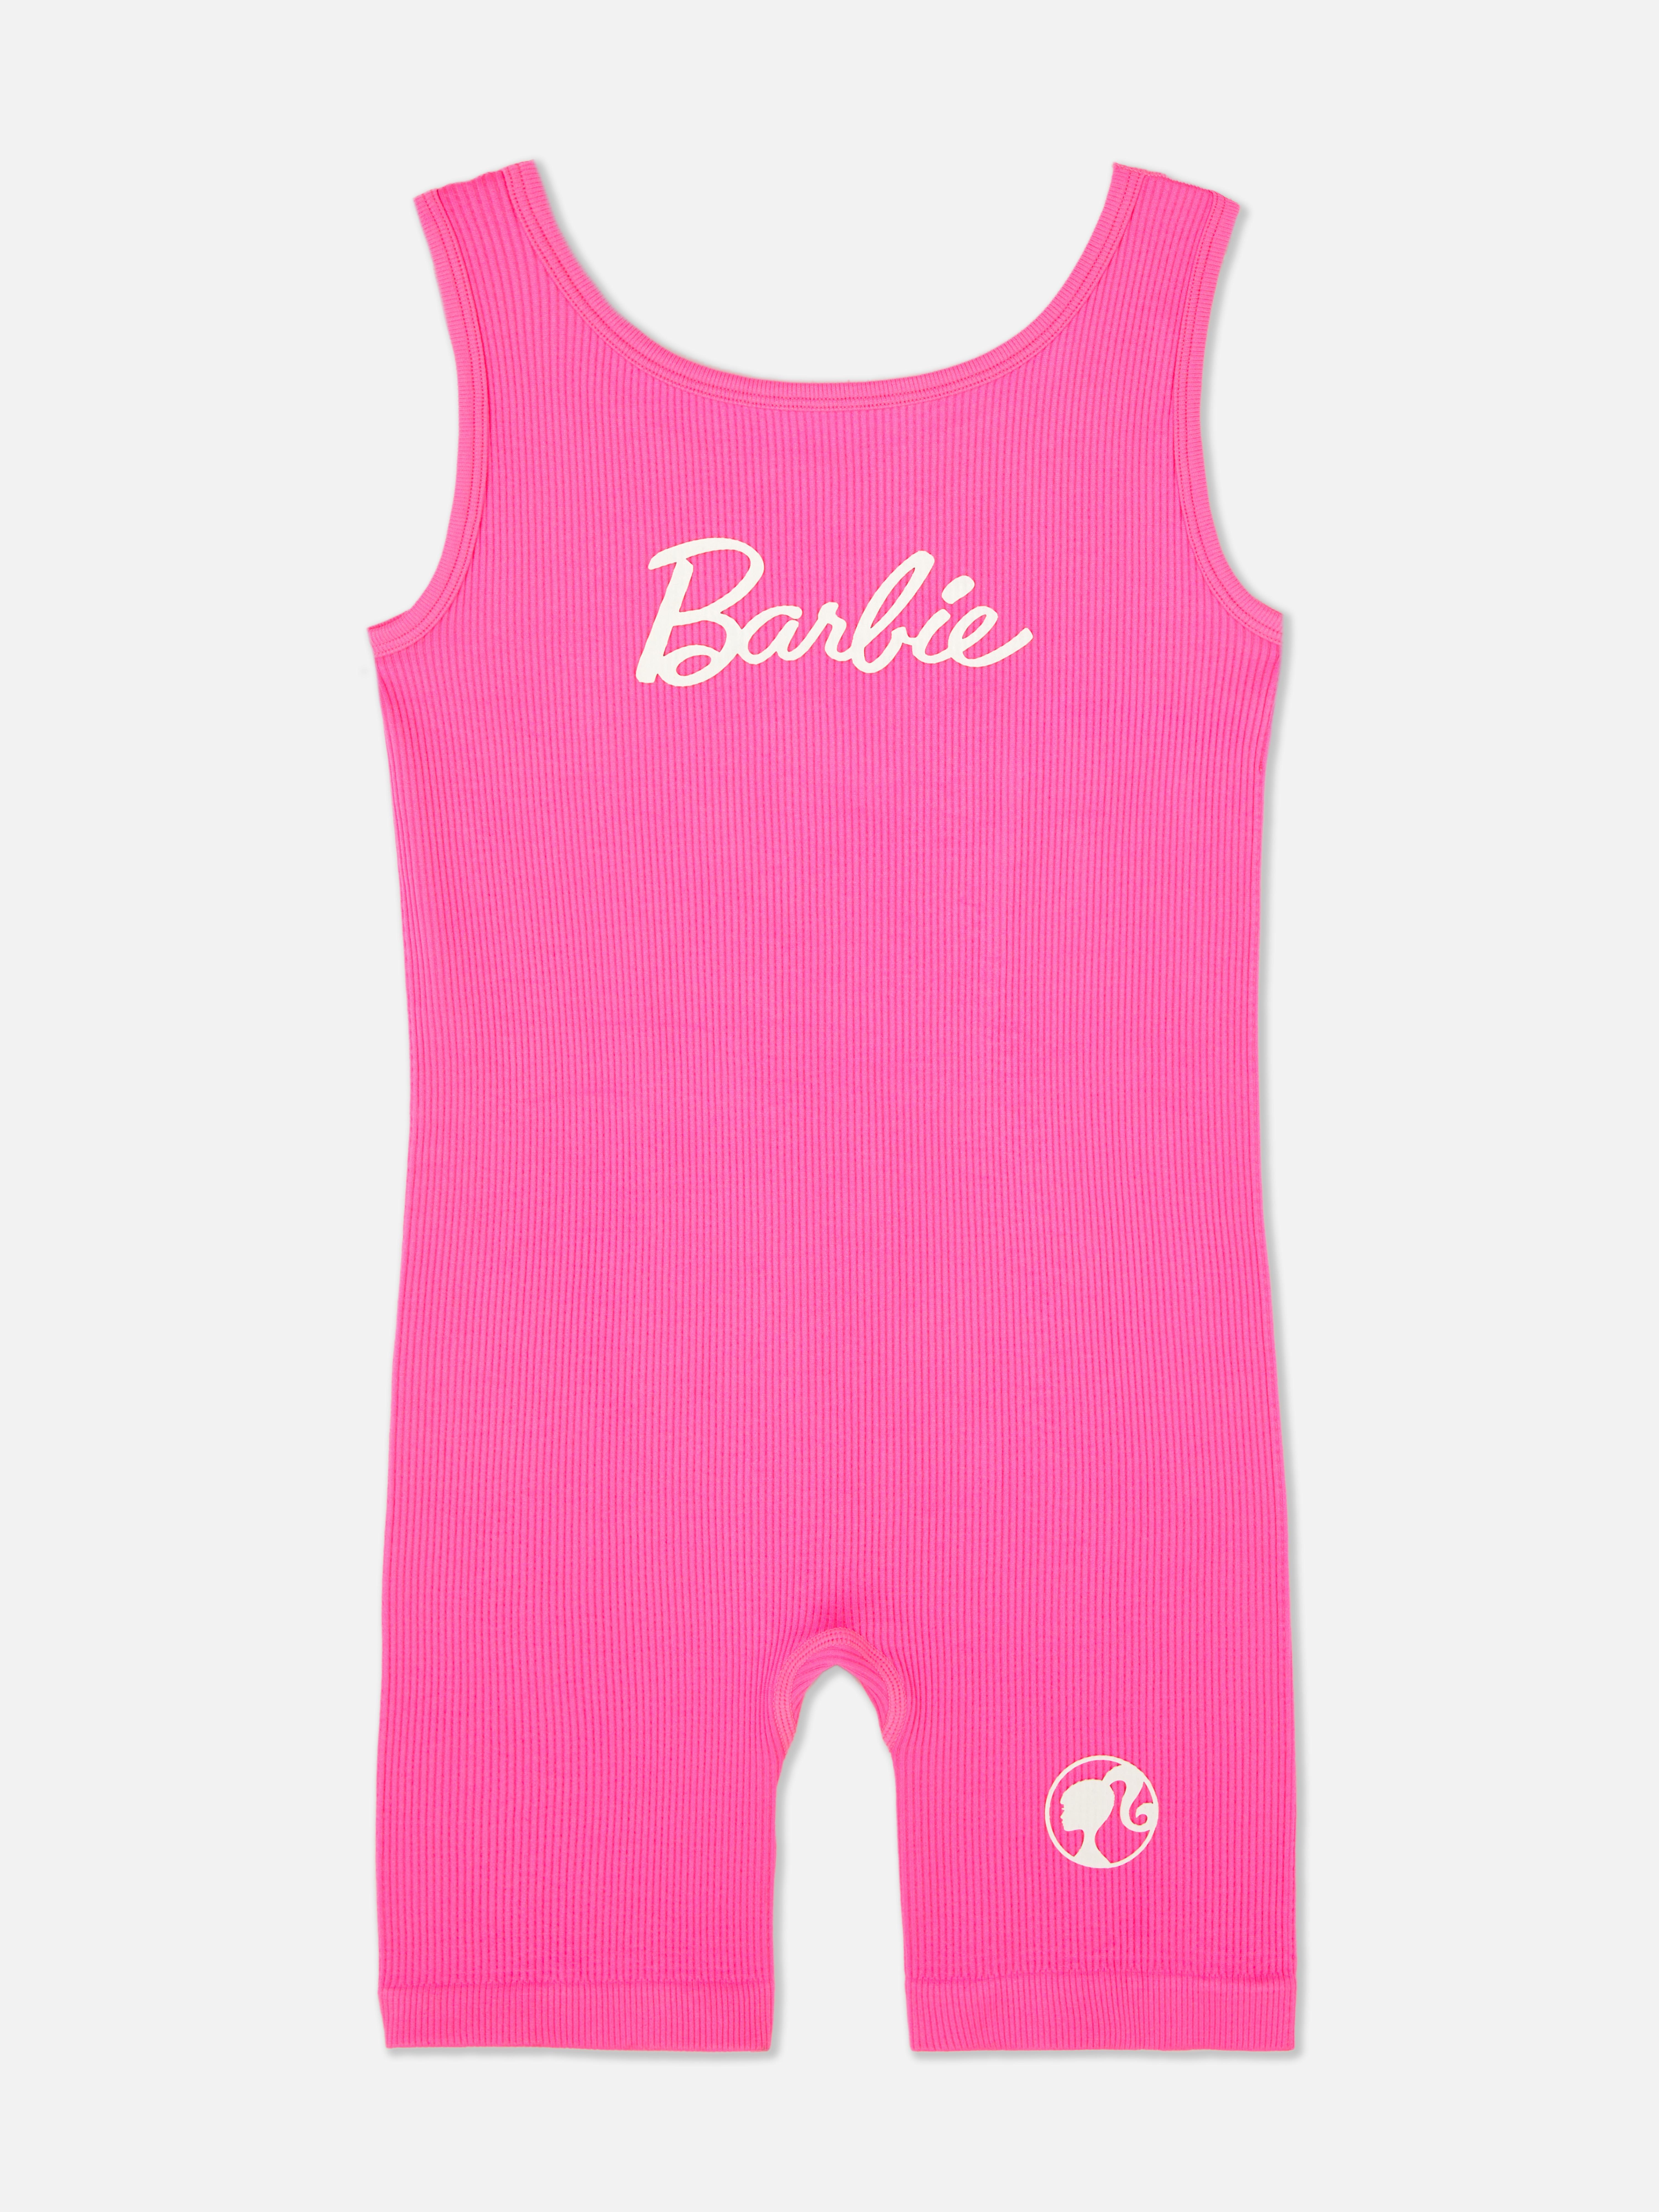 Barbie Logo Bodysuits for Women